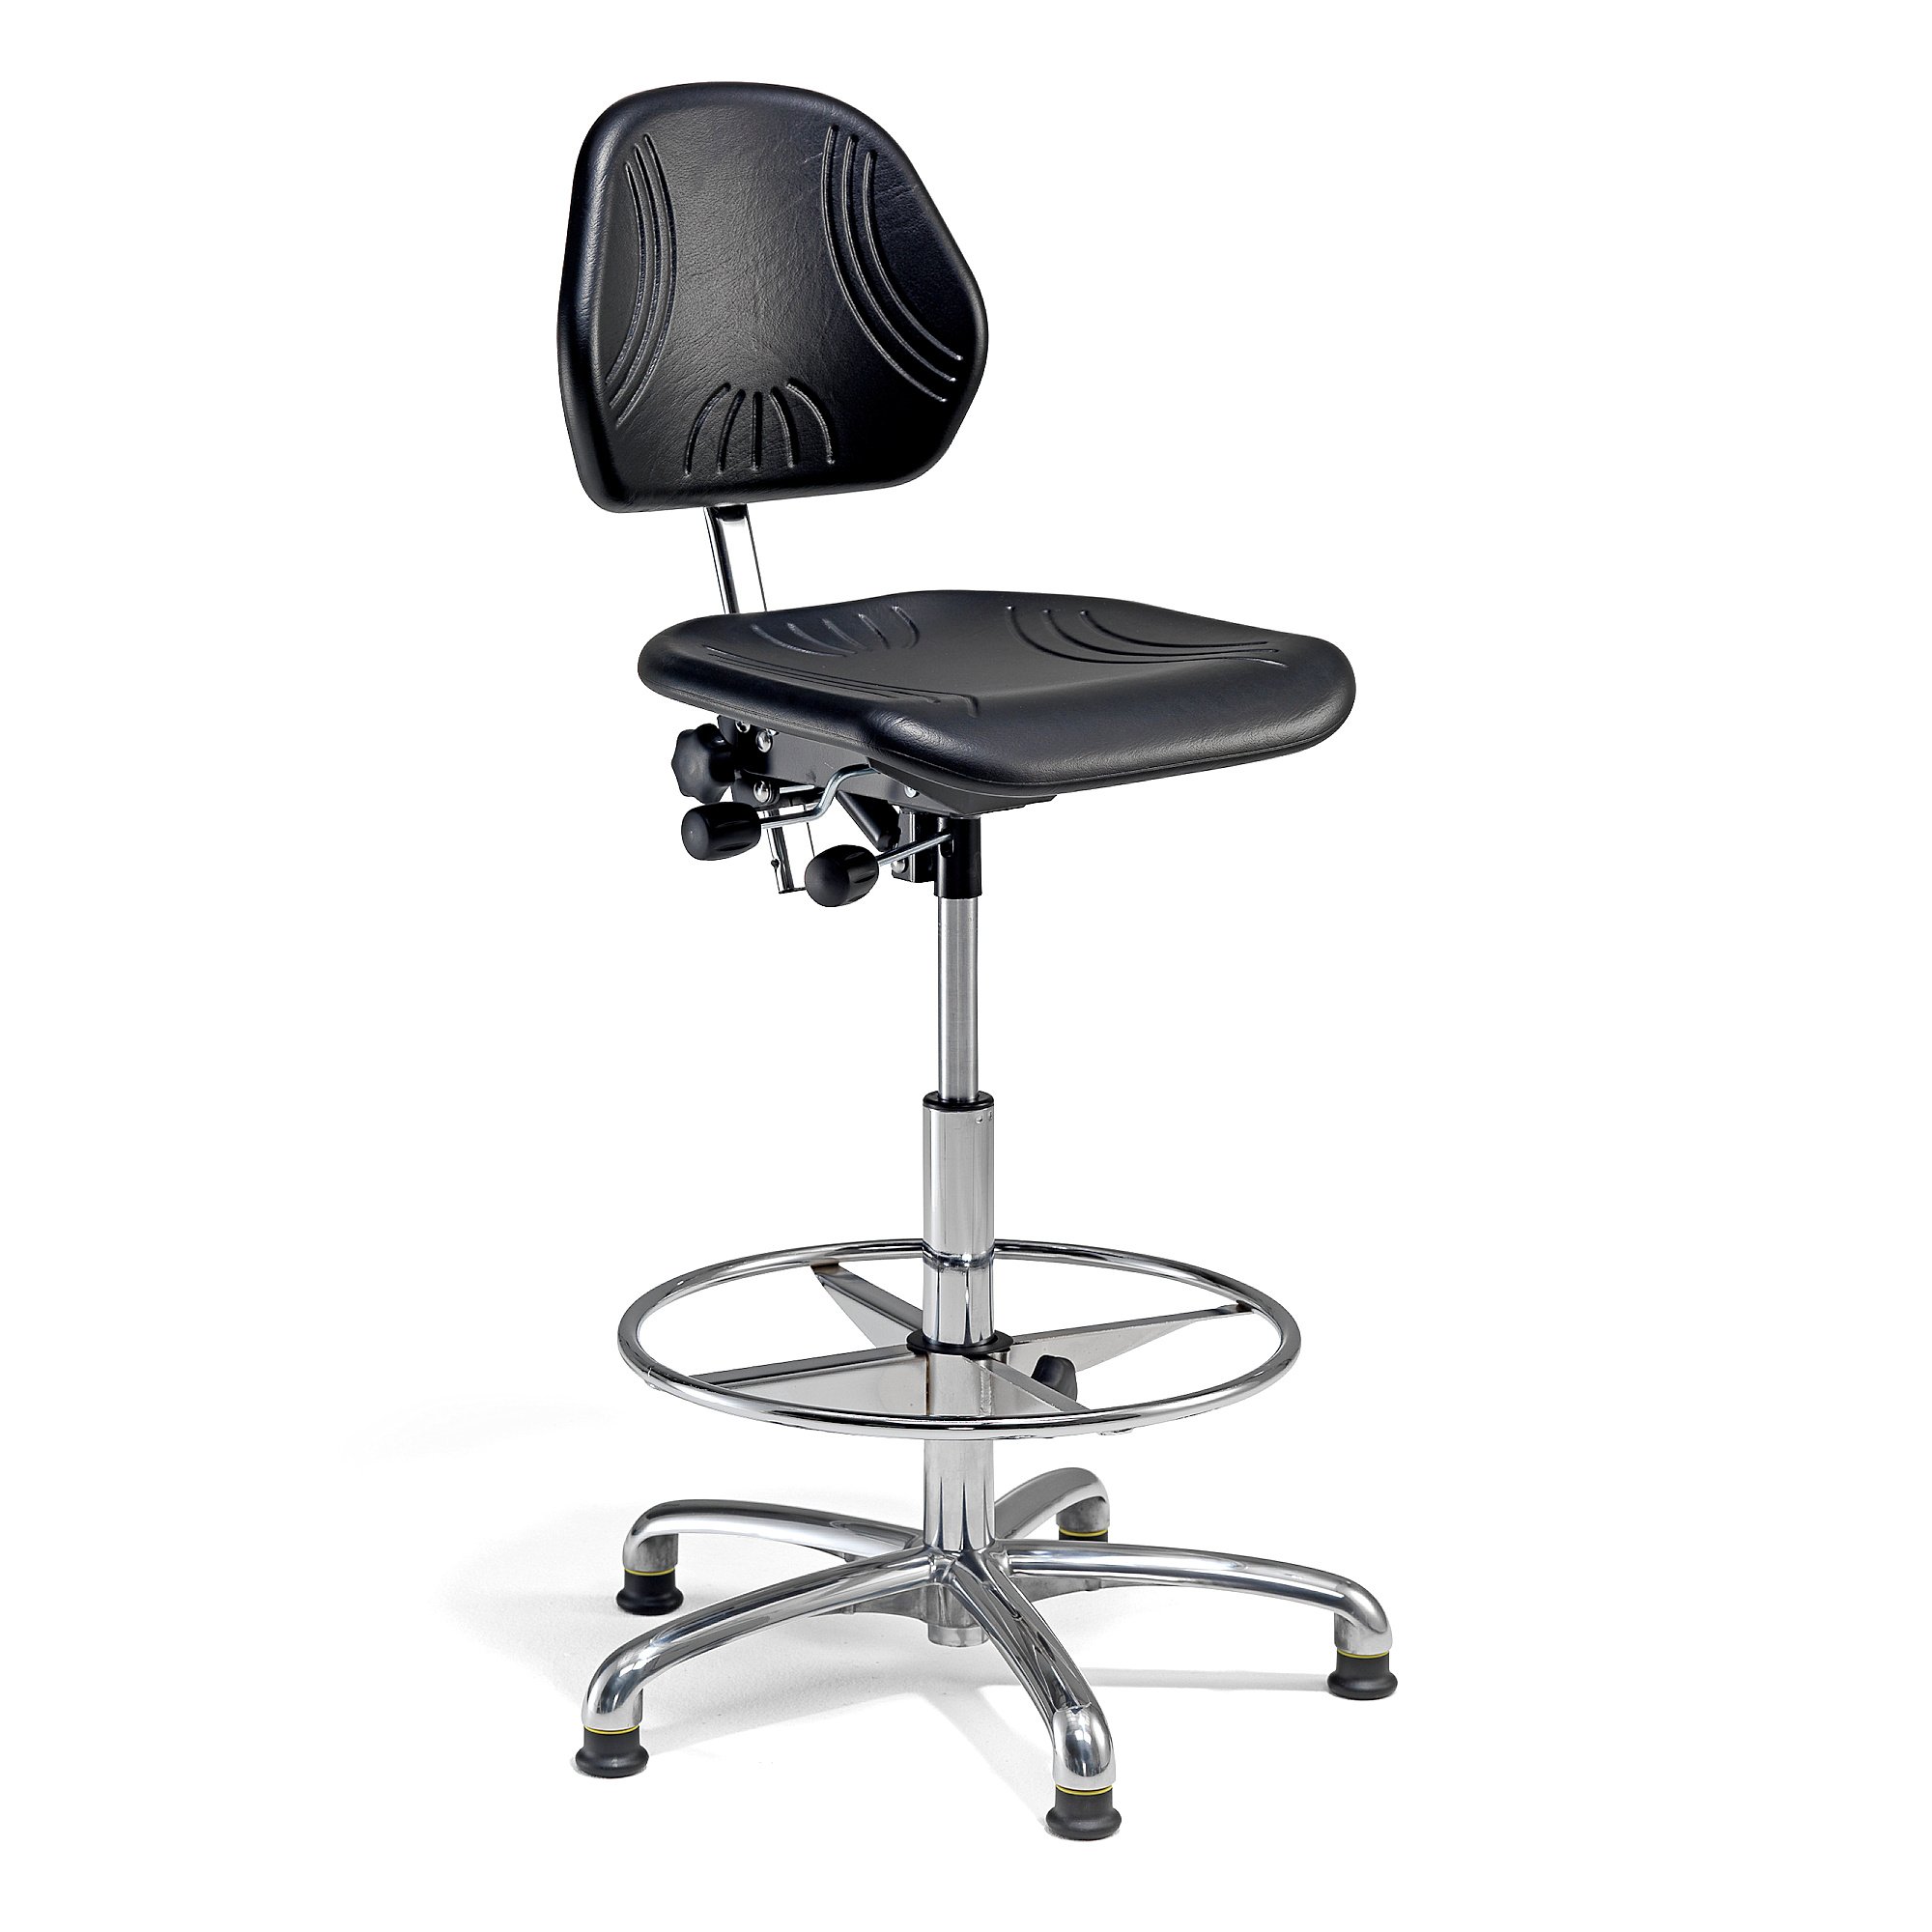 E-shop ESD pracovná dielenská stolička, s opierkou nôh, výška 700-960 mm